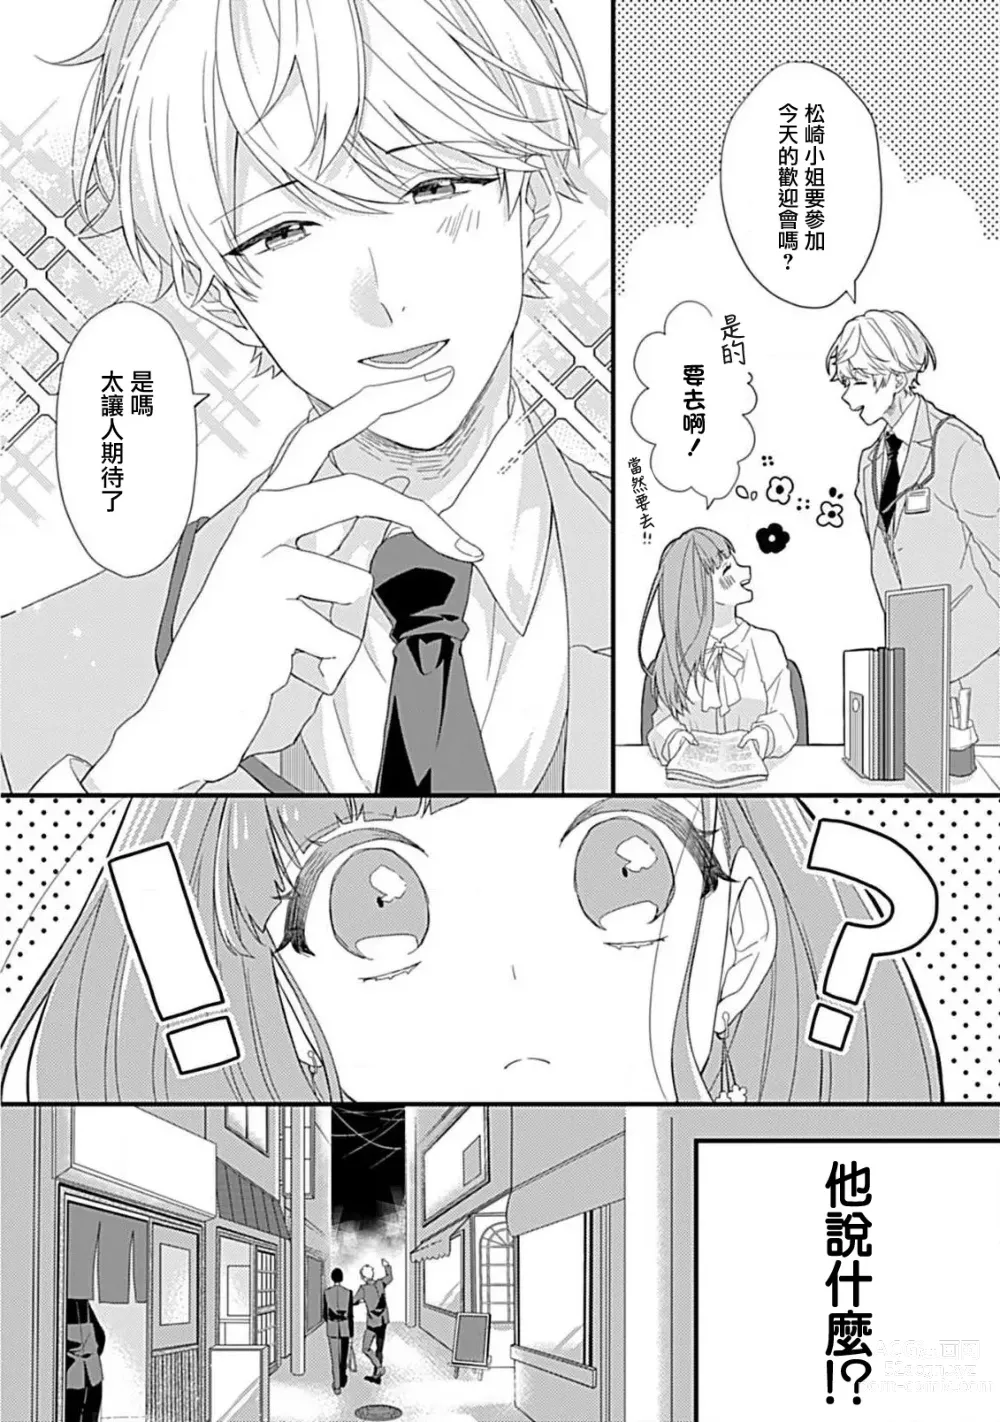 Page 7 of manga 辛德瑞拉综合征与溺爱王子